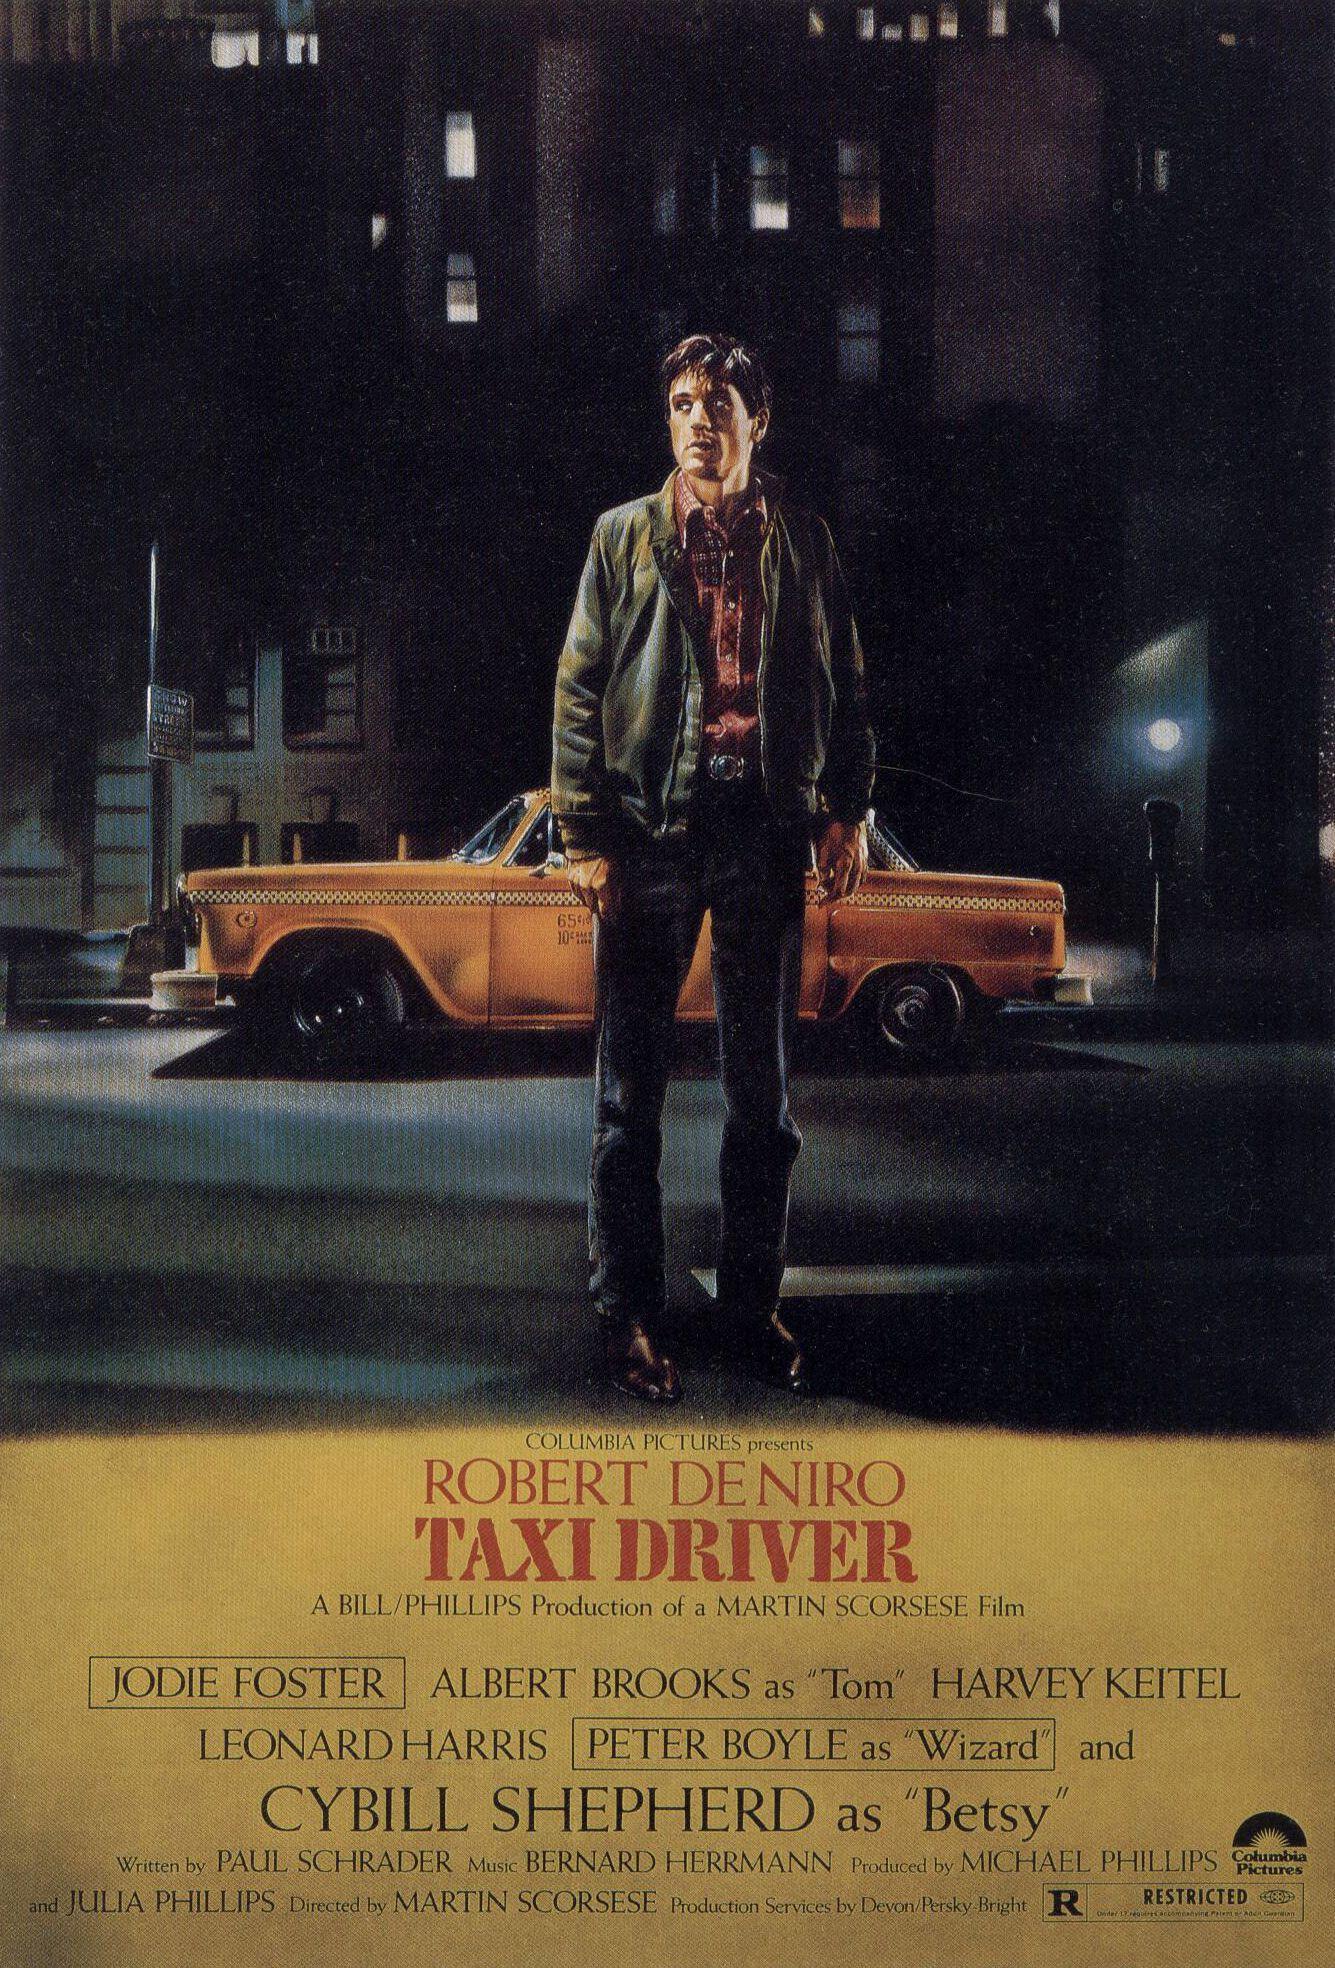 Taxi Driver, Robert De Niro, movie posters Wallpapers